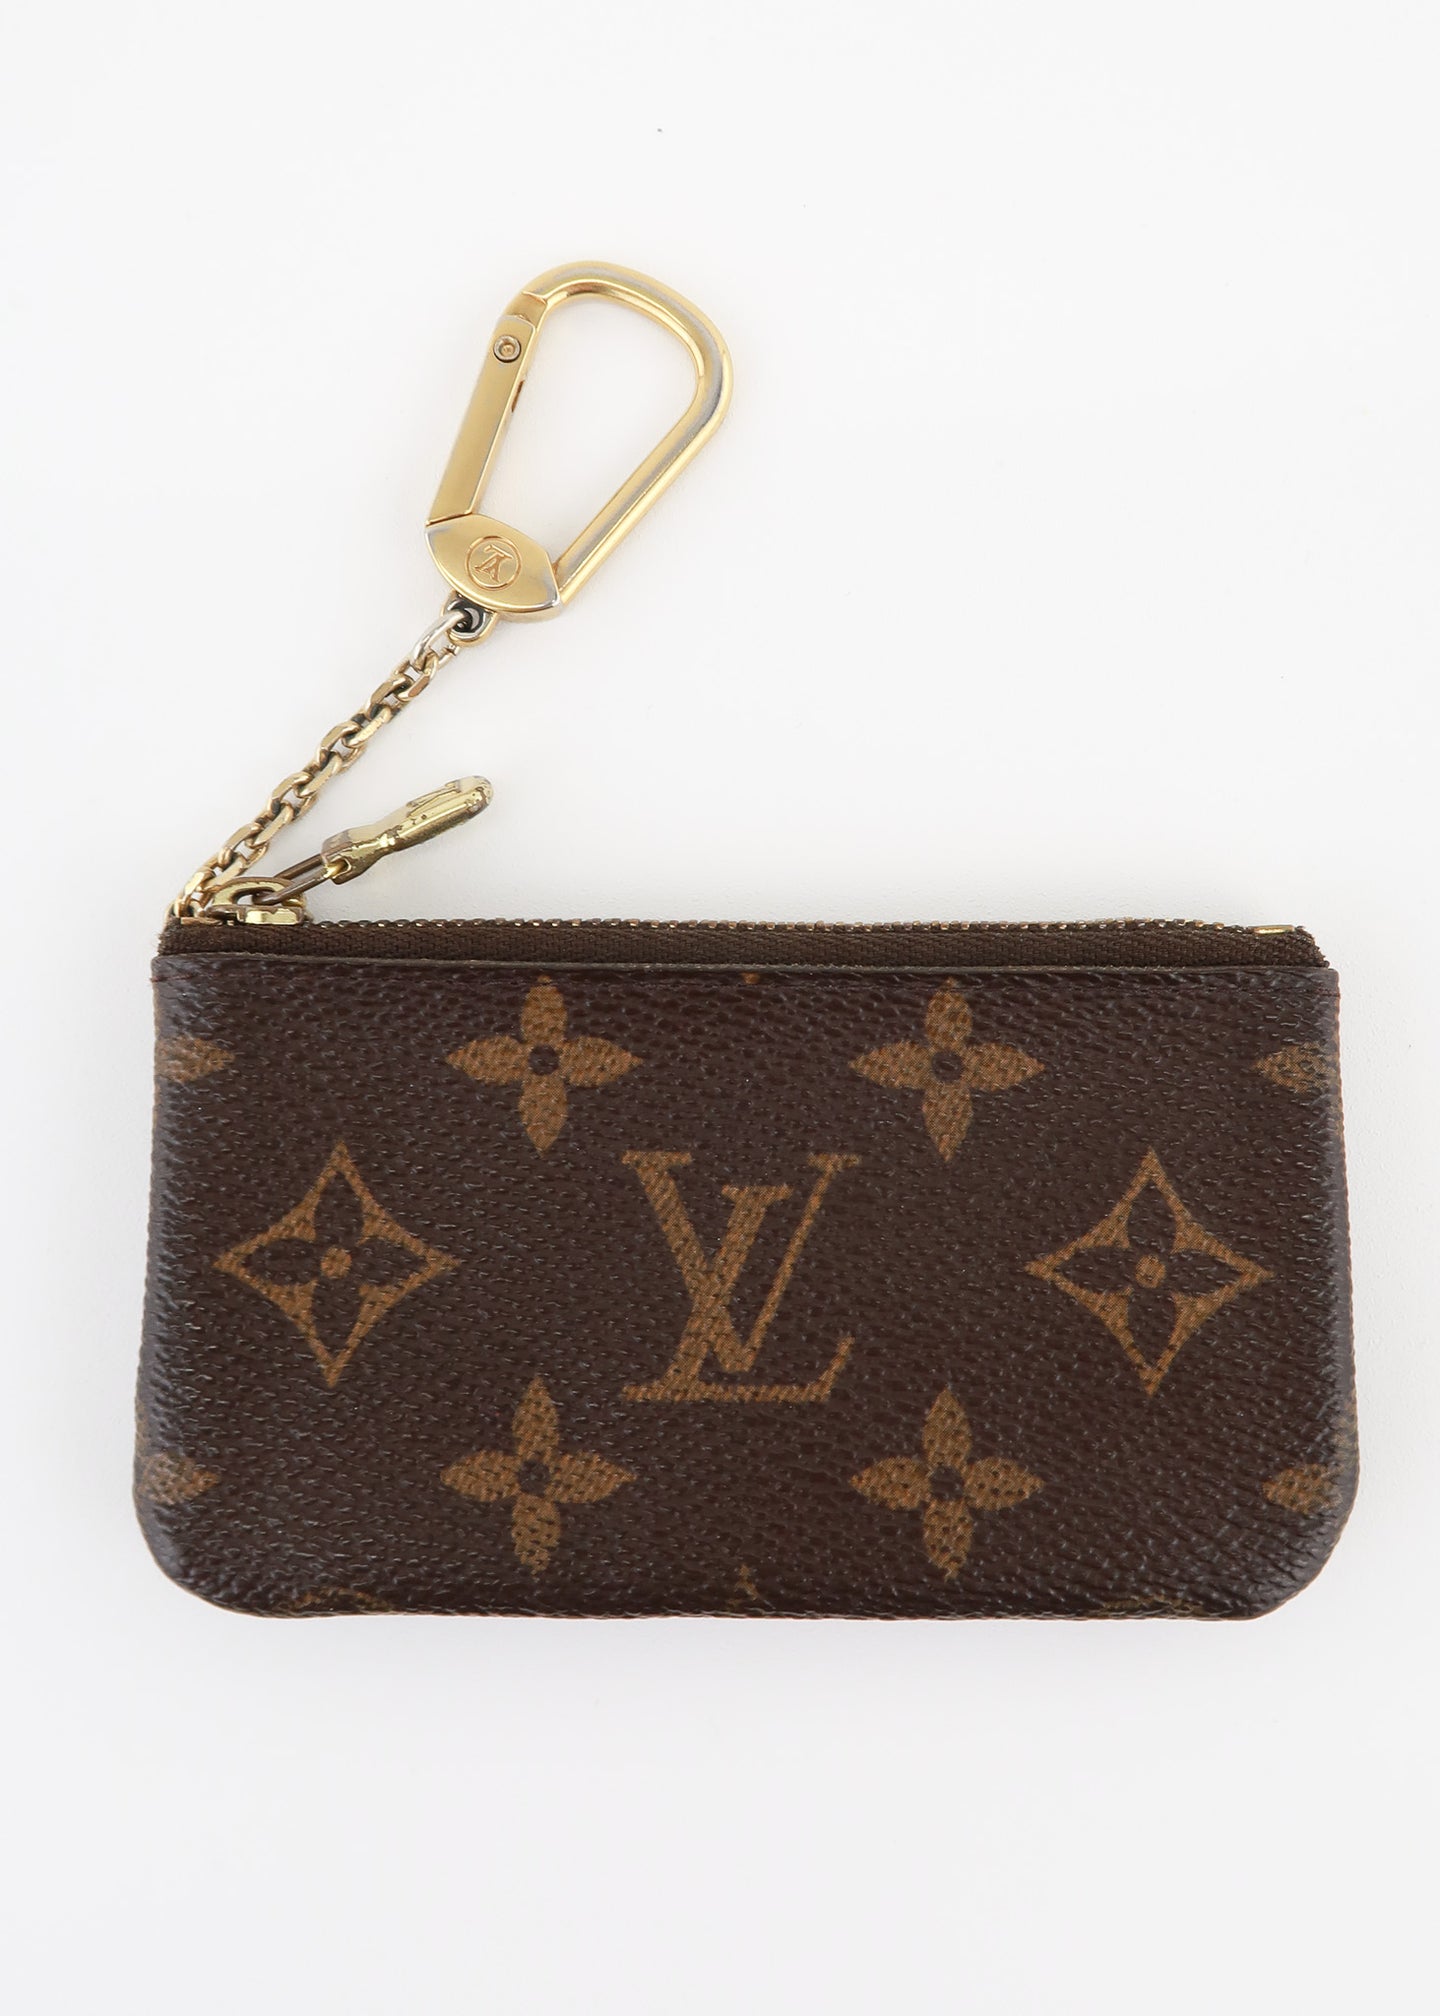 Louis Vuitton Monogram Key Pouch  THE PURSE AFFAIR